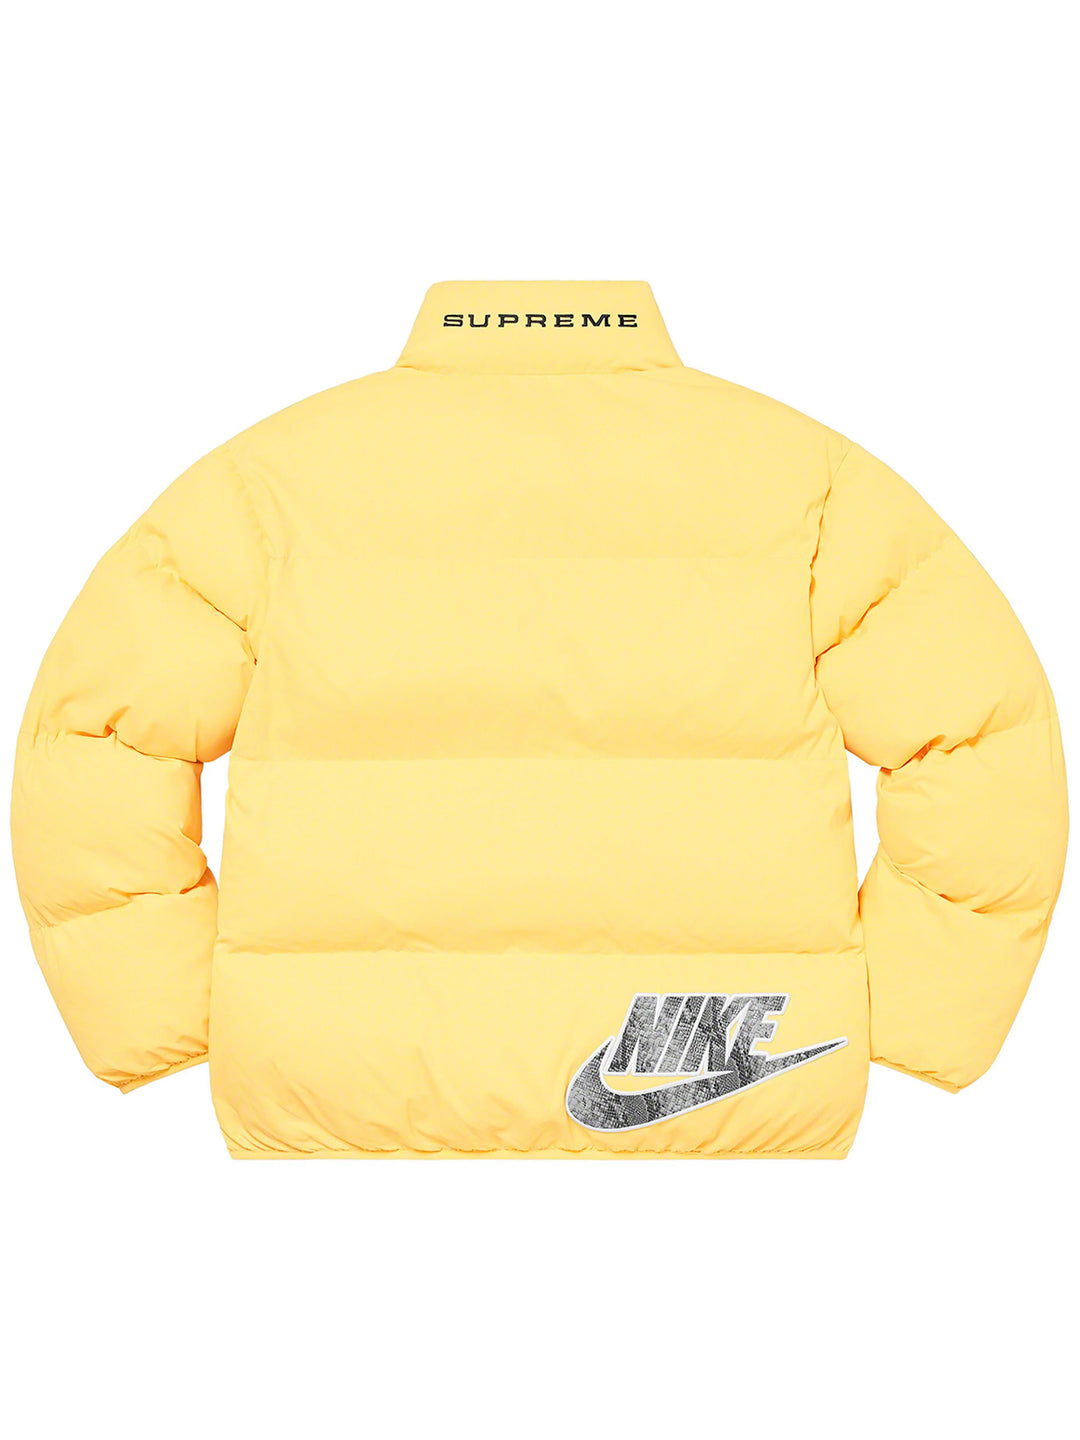 Supreme X Nike Reversible Puffer Jacket PALE YELLOW [SS21] Prior